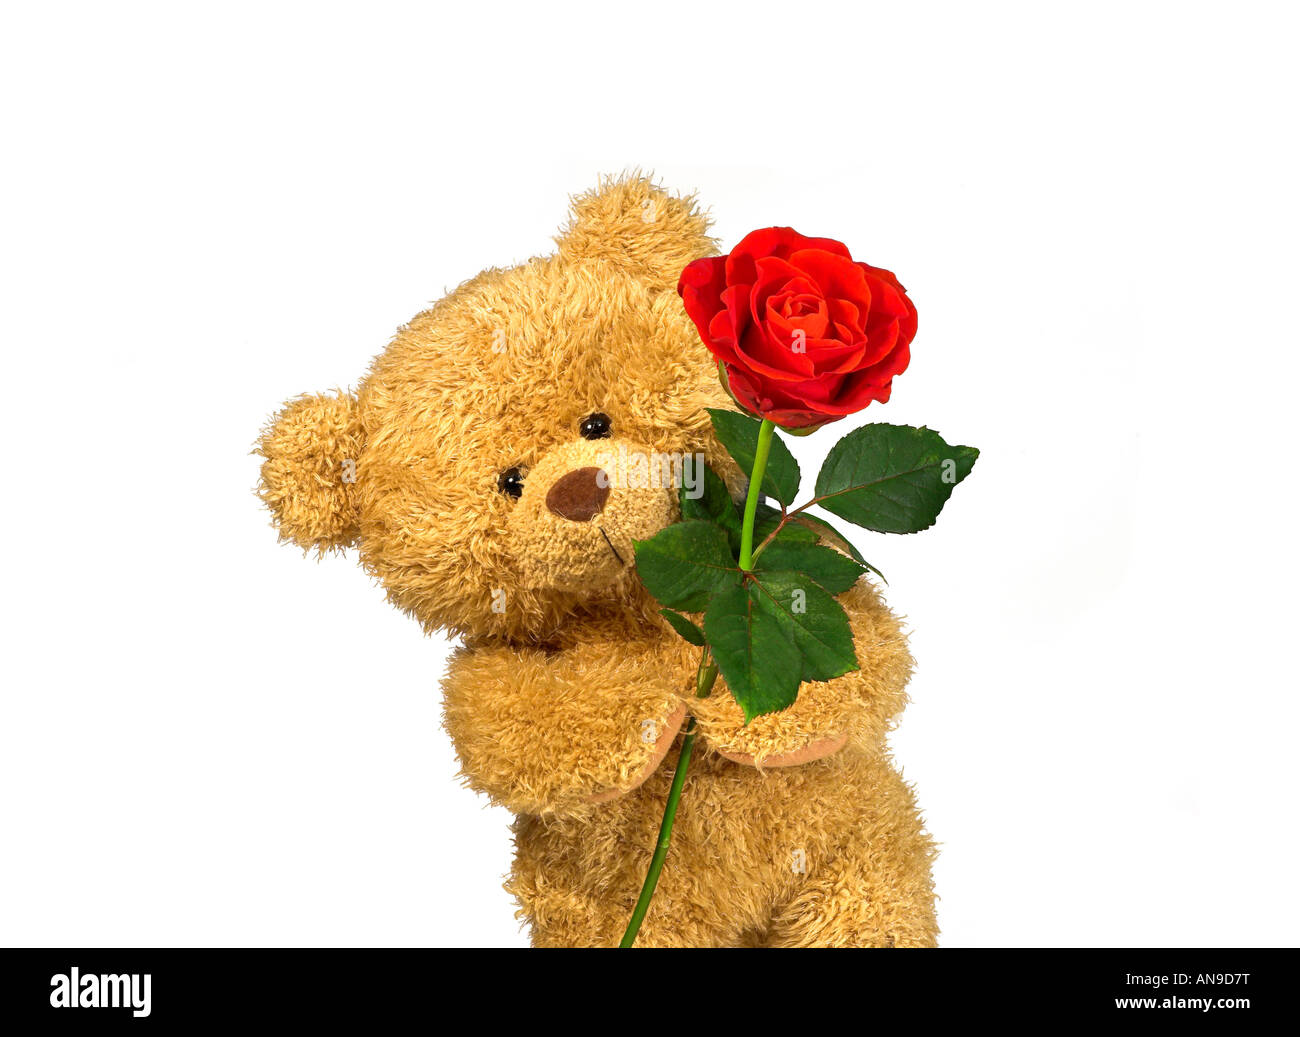 Teddybär mit roter rose Stockfotografie - Alamy